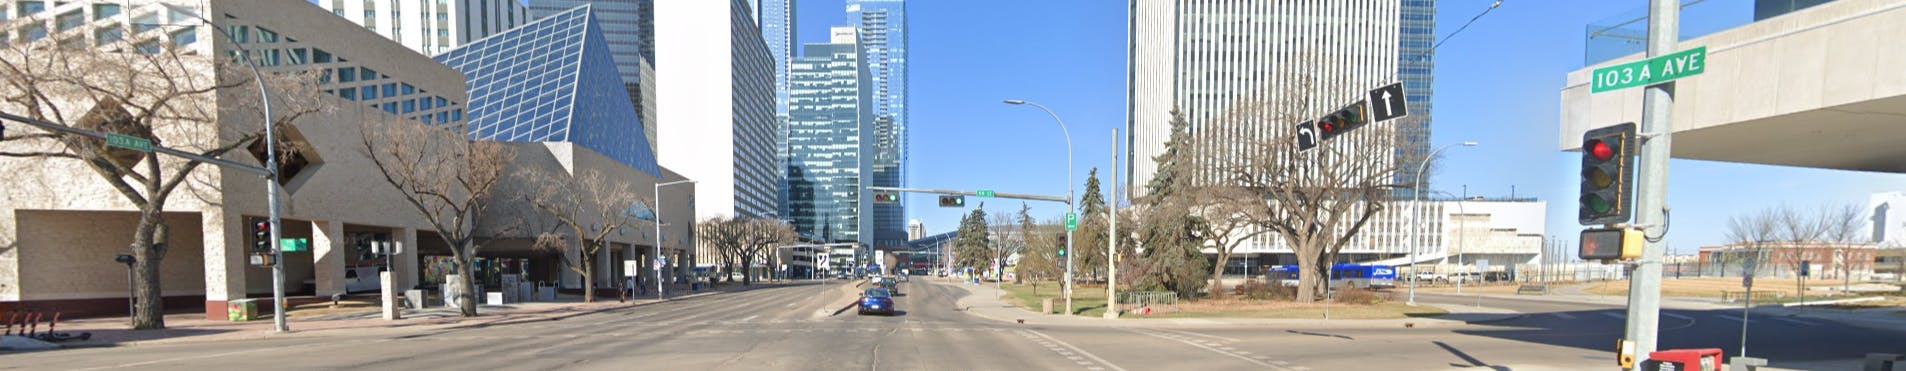 Google street view of 103A avenue looking westward from 99 street